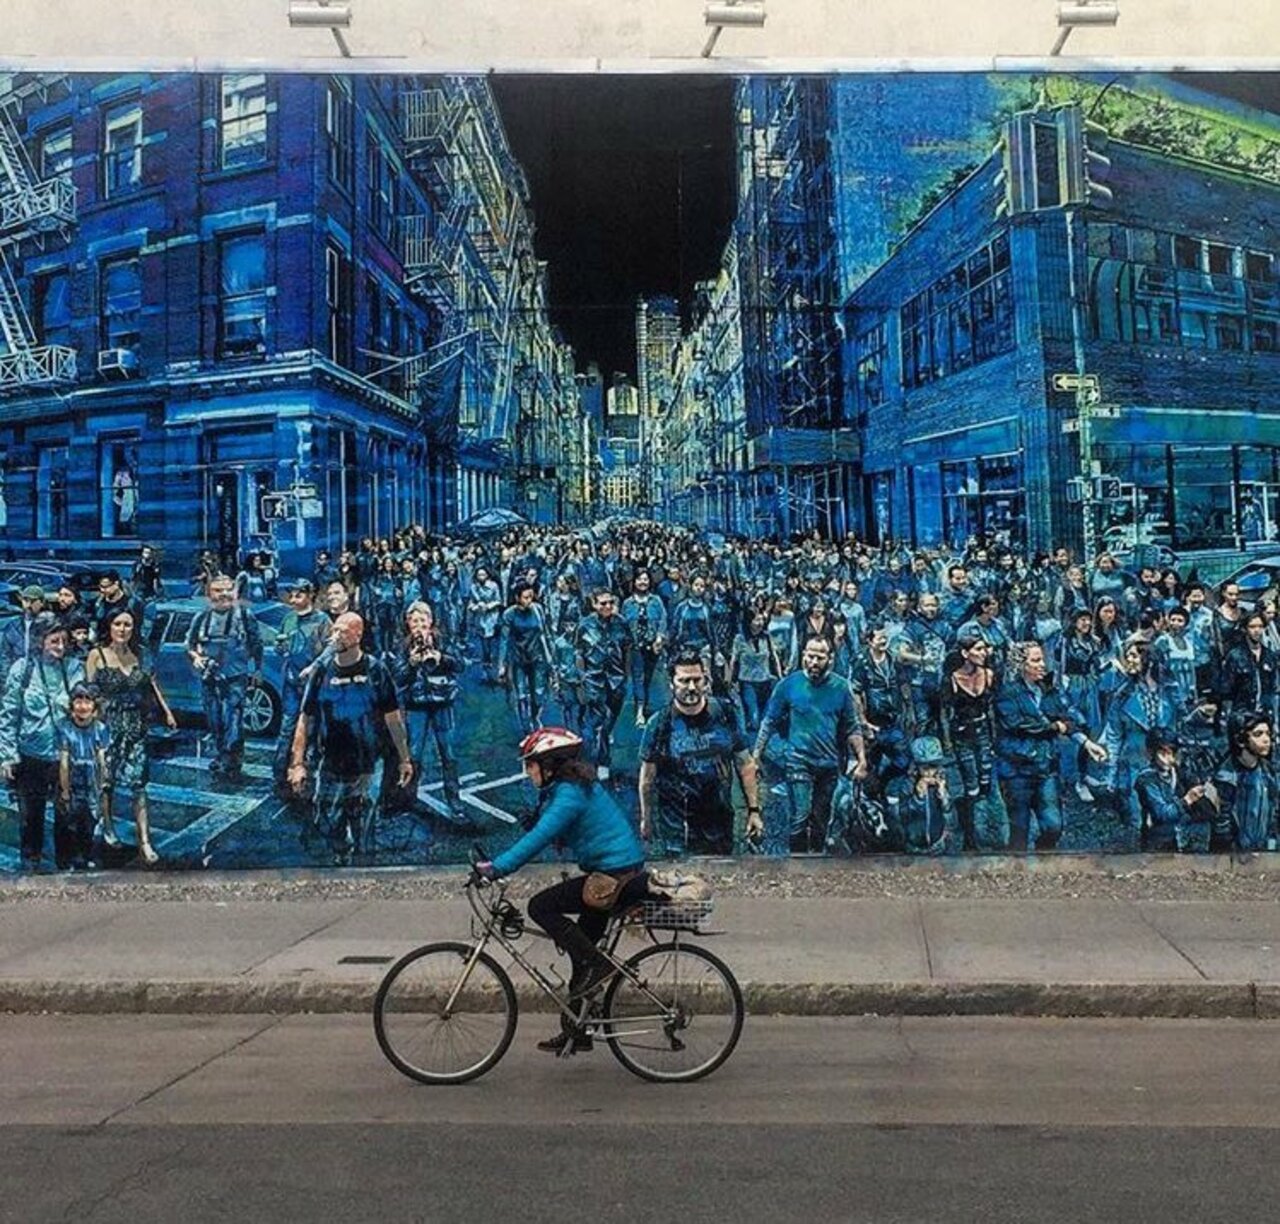 Street Art by Logan Hicks  NYC #art #mural #graffiti #streetart https://t.co/4oug90dFgM